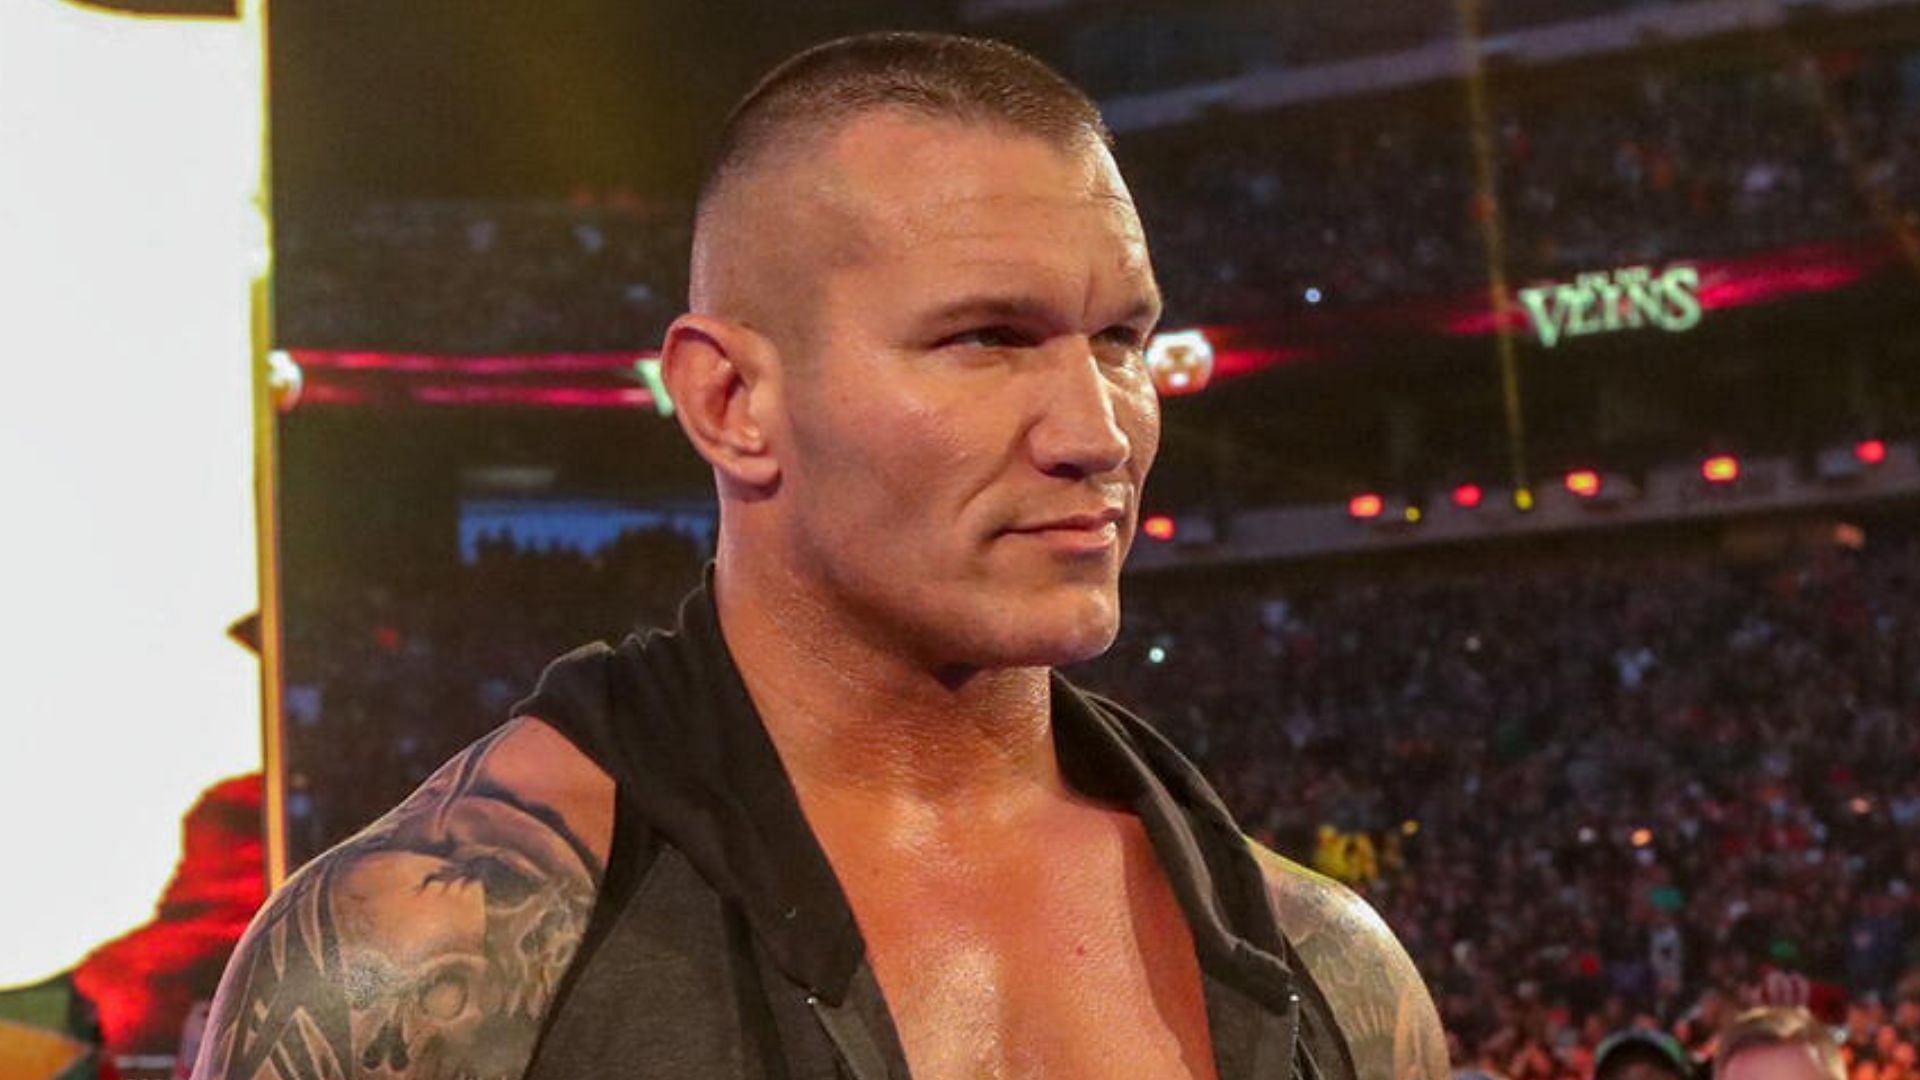 14-time WWE world champion Randy Orton